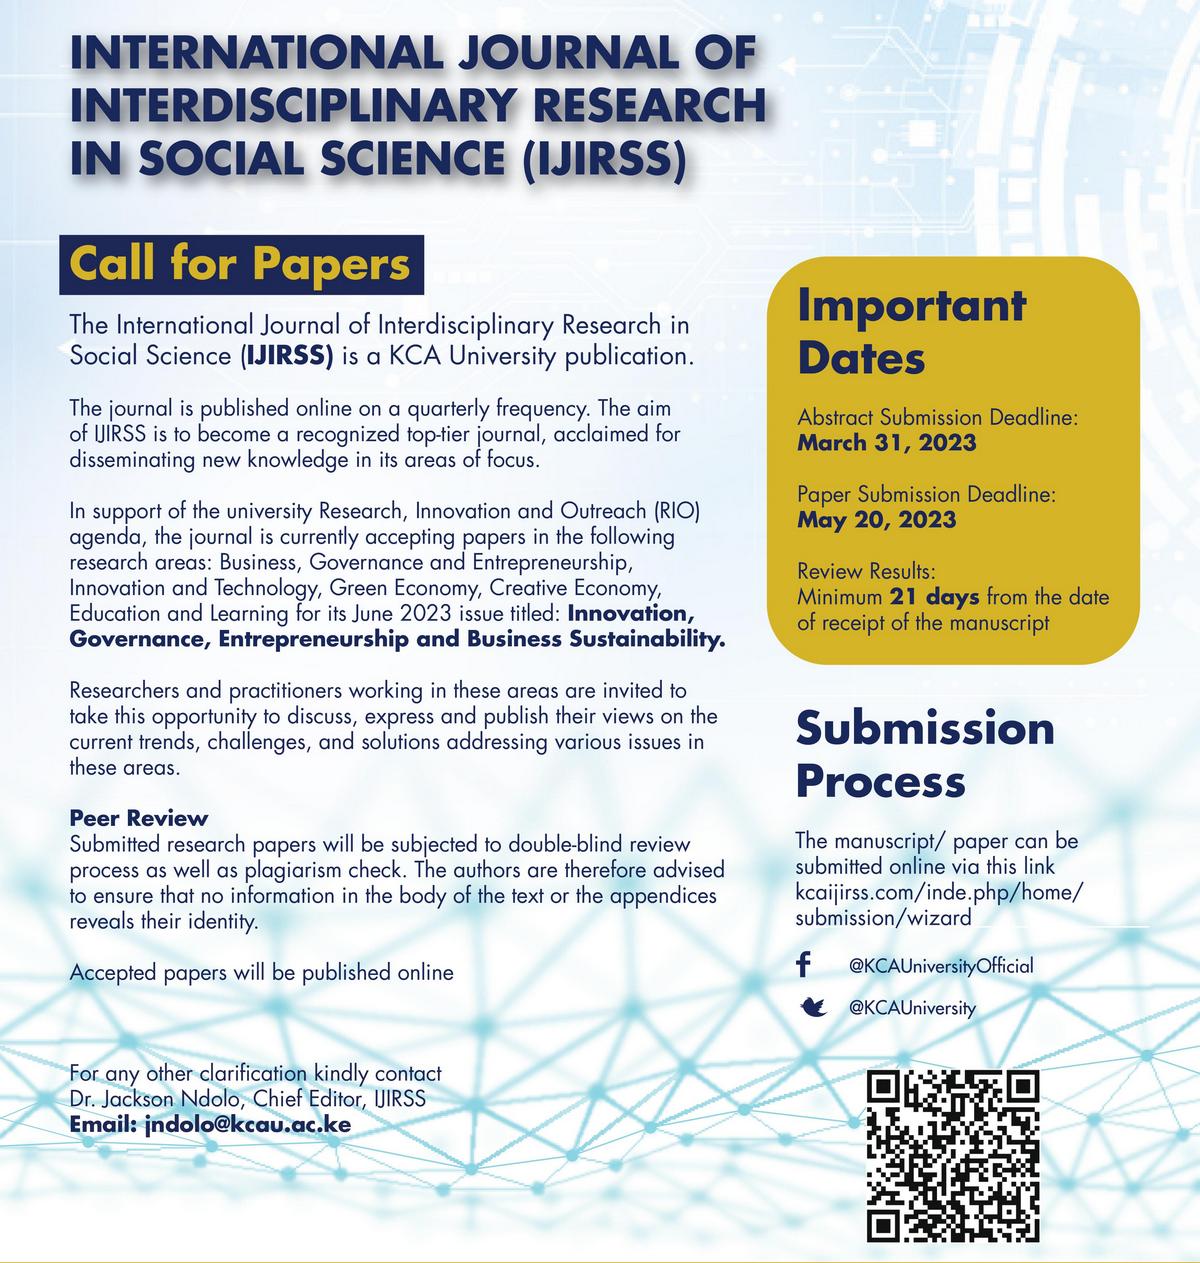 INTERNATIONAL JOURNAL OF INTERDISCIPLINARY RESEARCH IN SOCIAL SCIENCE